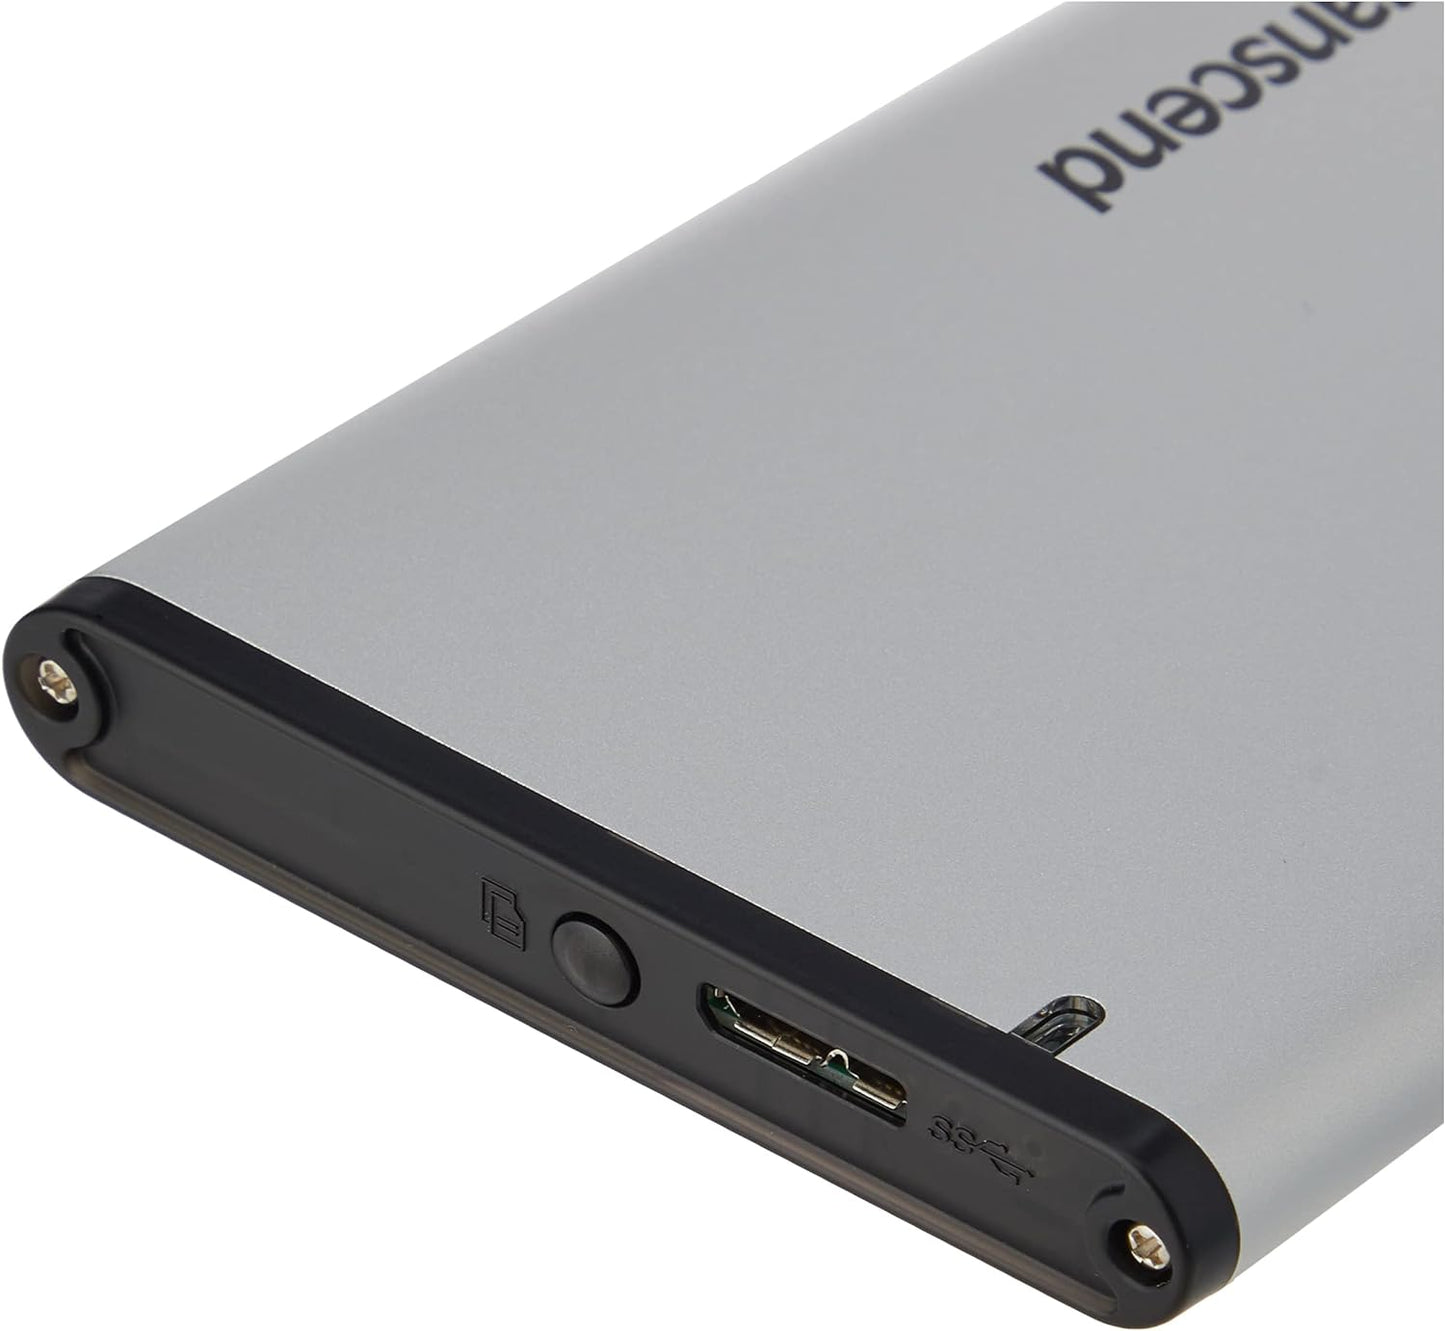 Transcend StoreJet USB 3.0 2.5" Aluminum External Hard Drive Enclosure (Brand New)